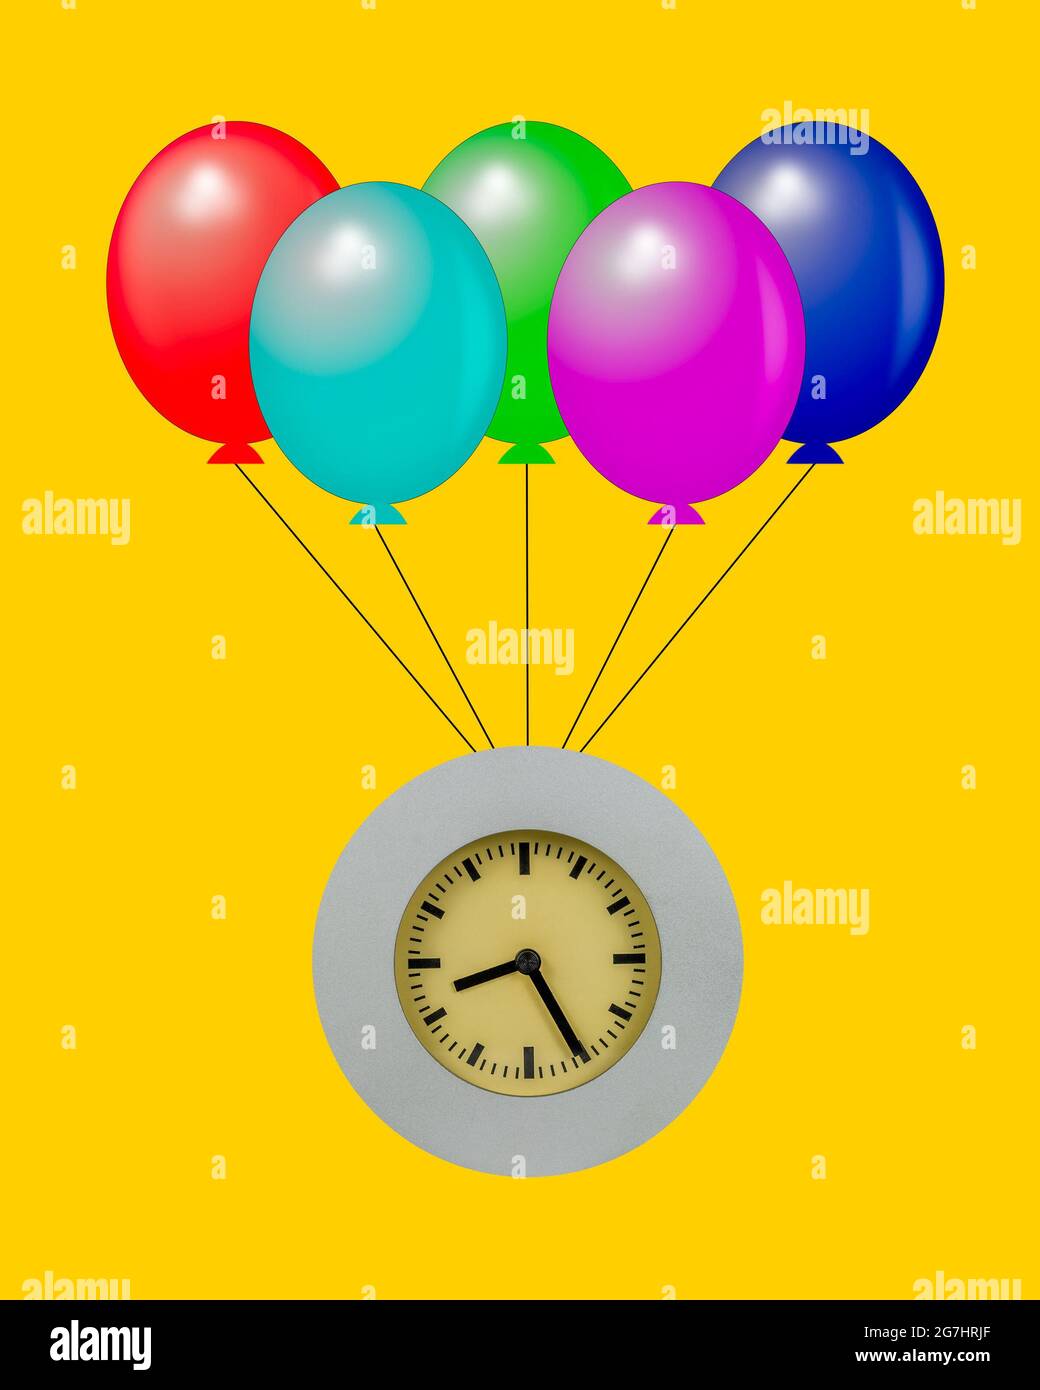 Time Flies, Flying Clock Foto Stock